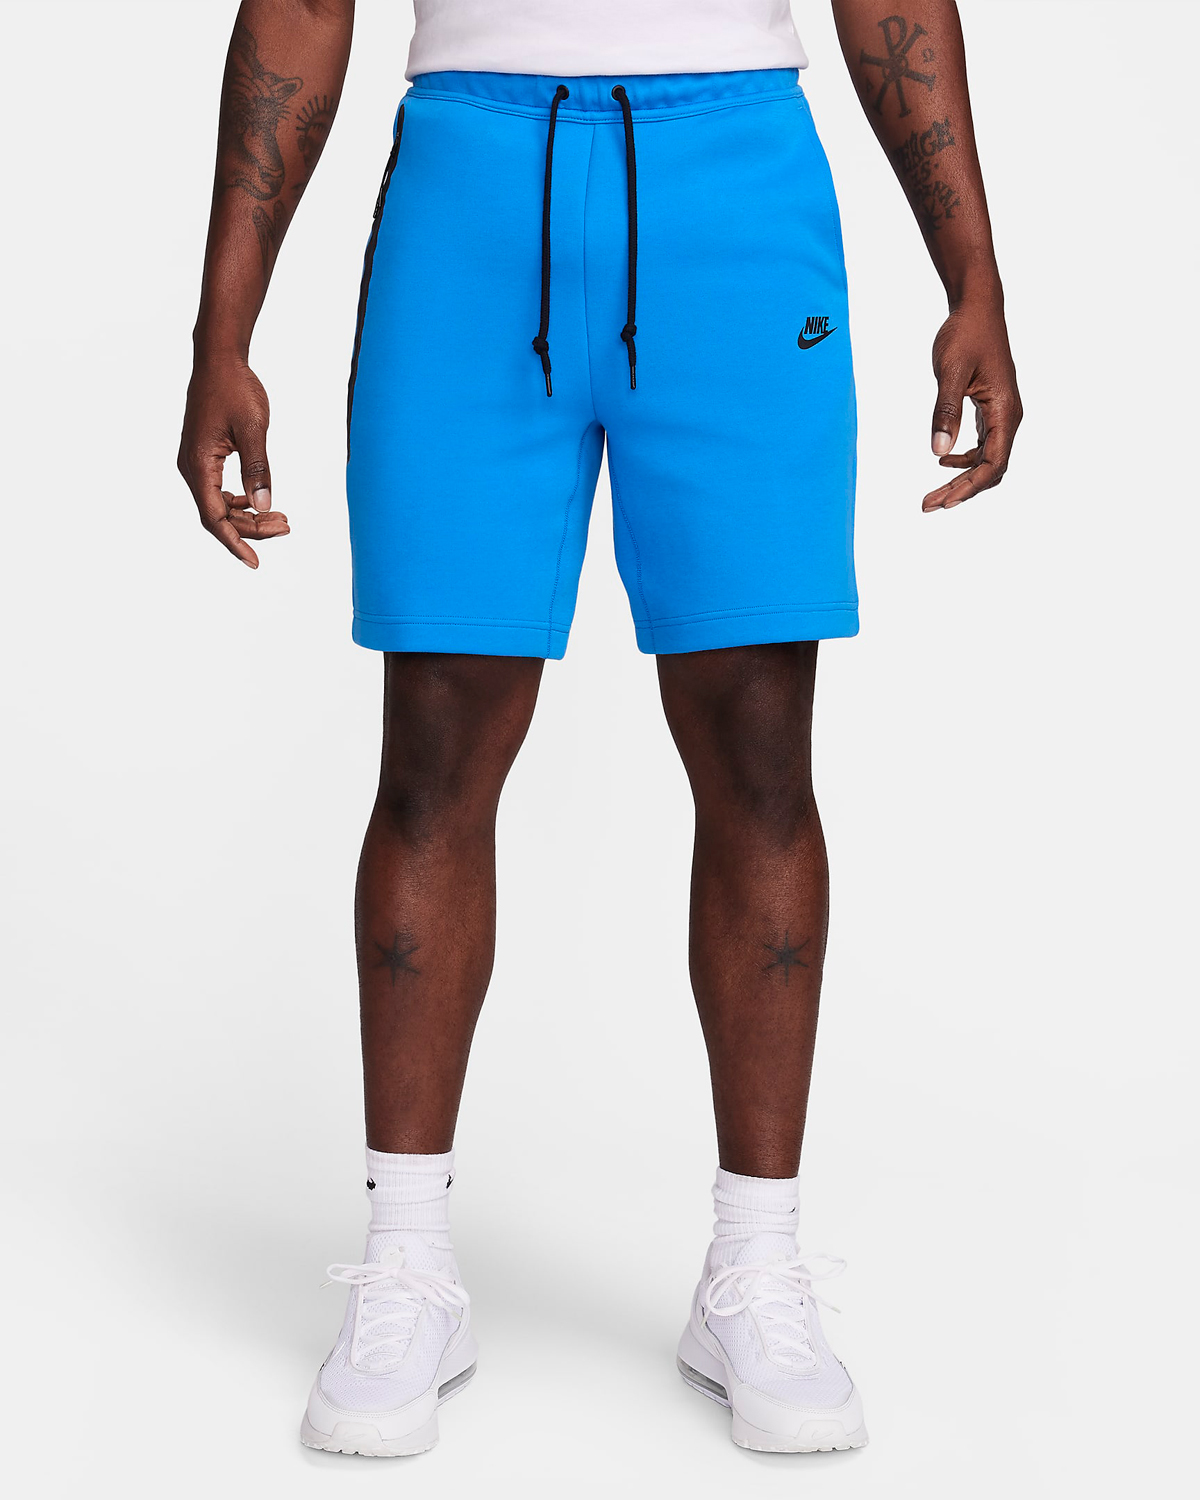 Nike Air Max Plus Photo Blue Tech Fleece Hoodie Jogger Pants